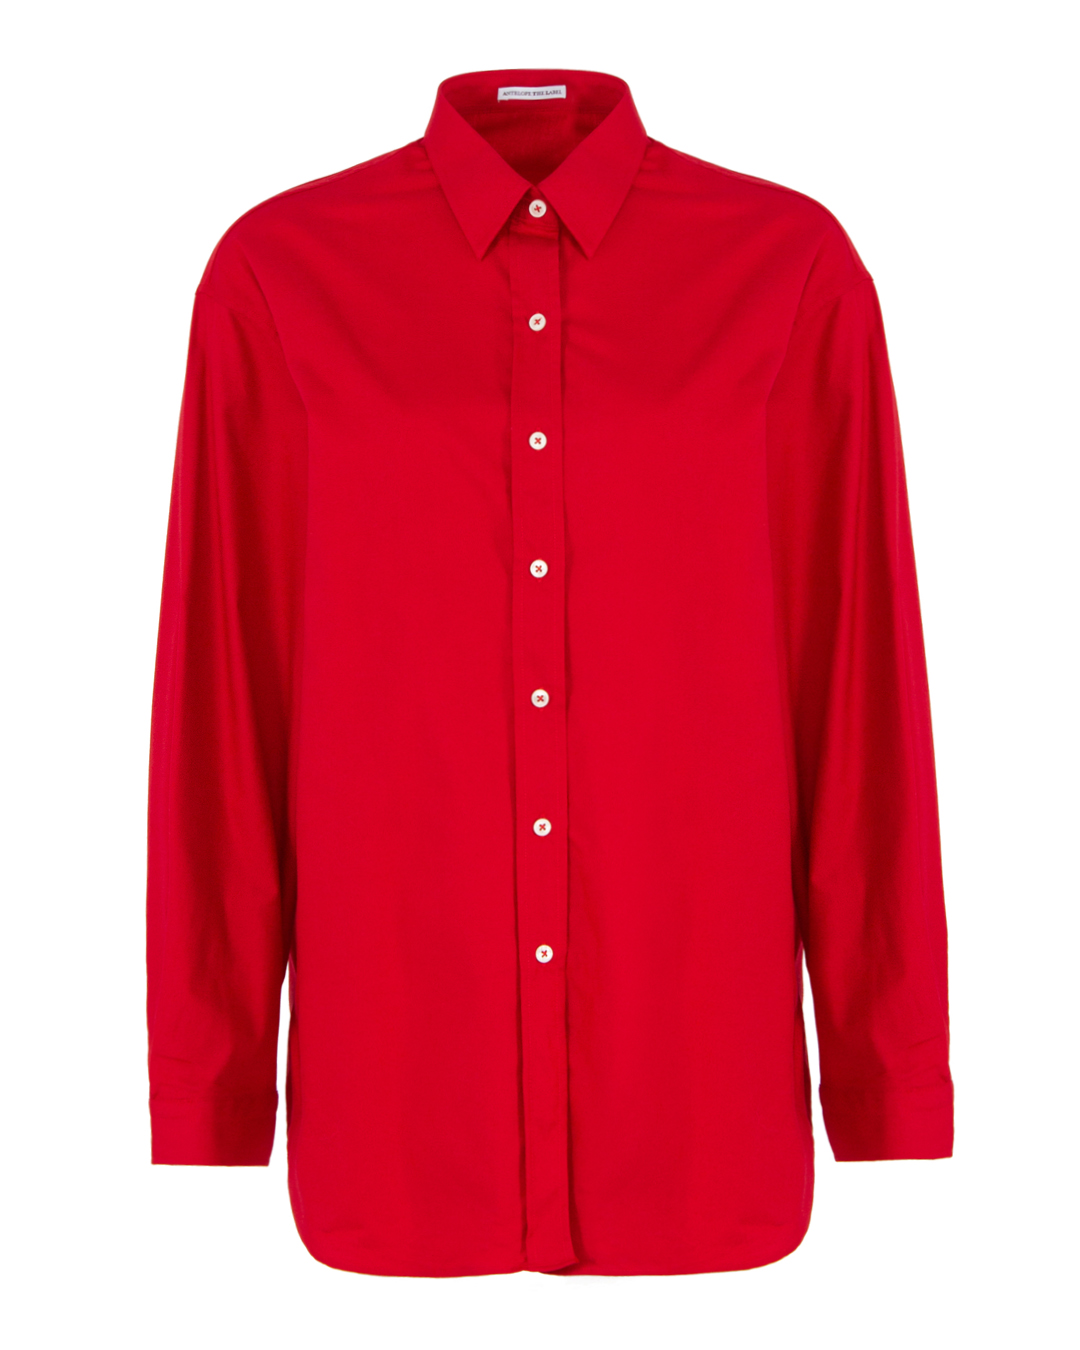 хлопковая рубашка ANTELOPE THE LABEL A1.RED.23/24 красный UNI, размер UNI A1.RED.23/24 A1.RED.23/24 красный UNI - фото 1